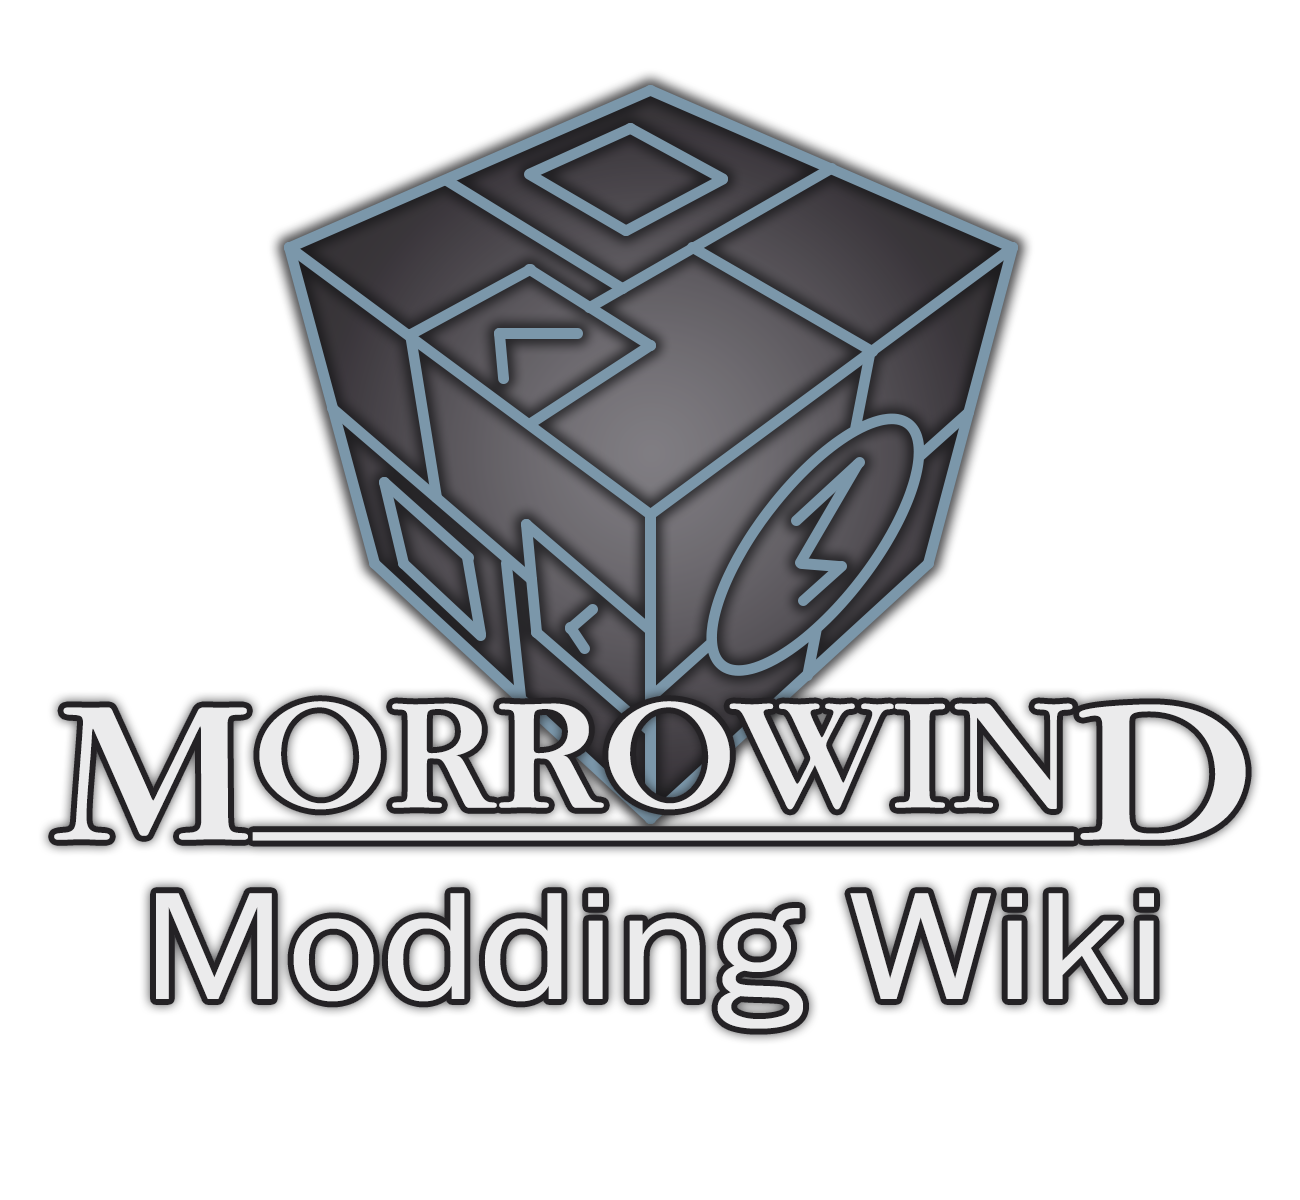 The Morrowind Modding Wiki